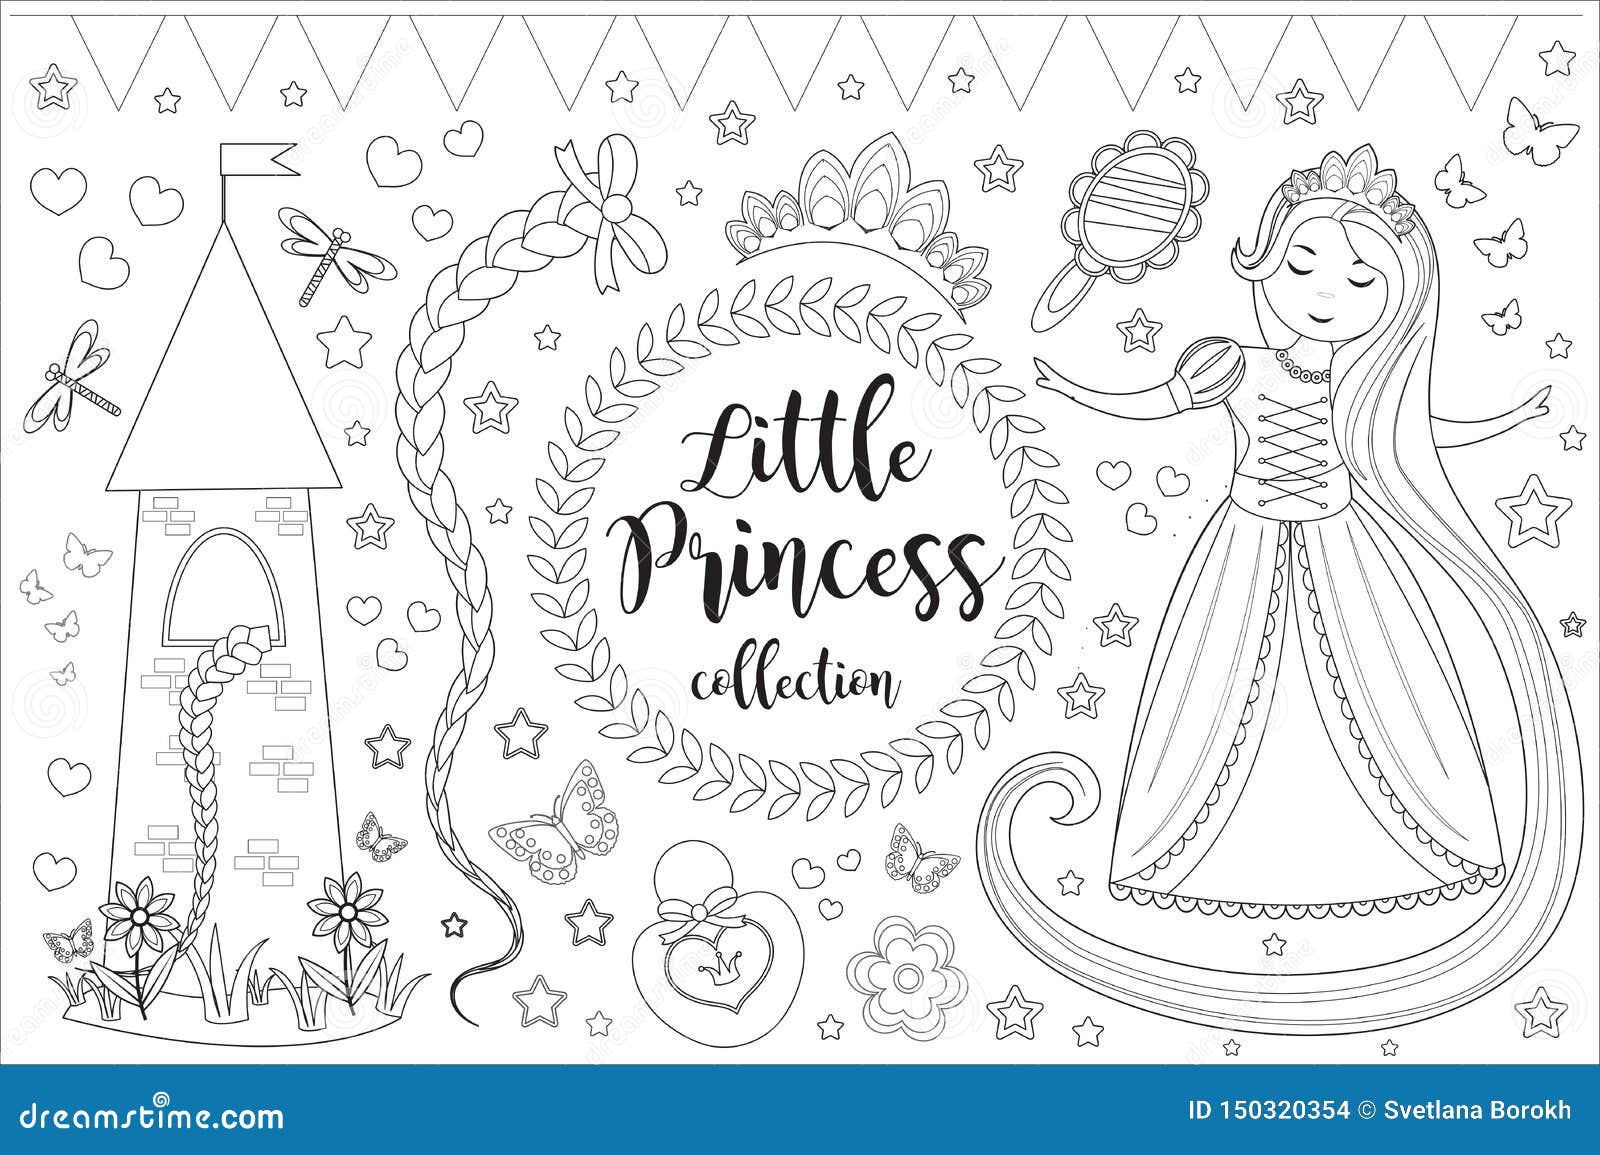 Kit 6 Revistas De Colorir Pintar Atividades Princesas Disney Mulan,  Cinderella, Rapunzel